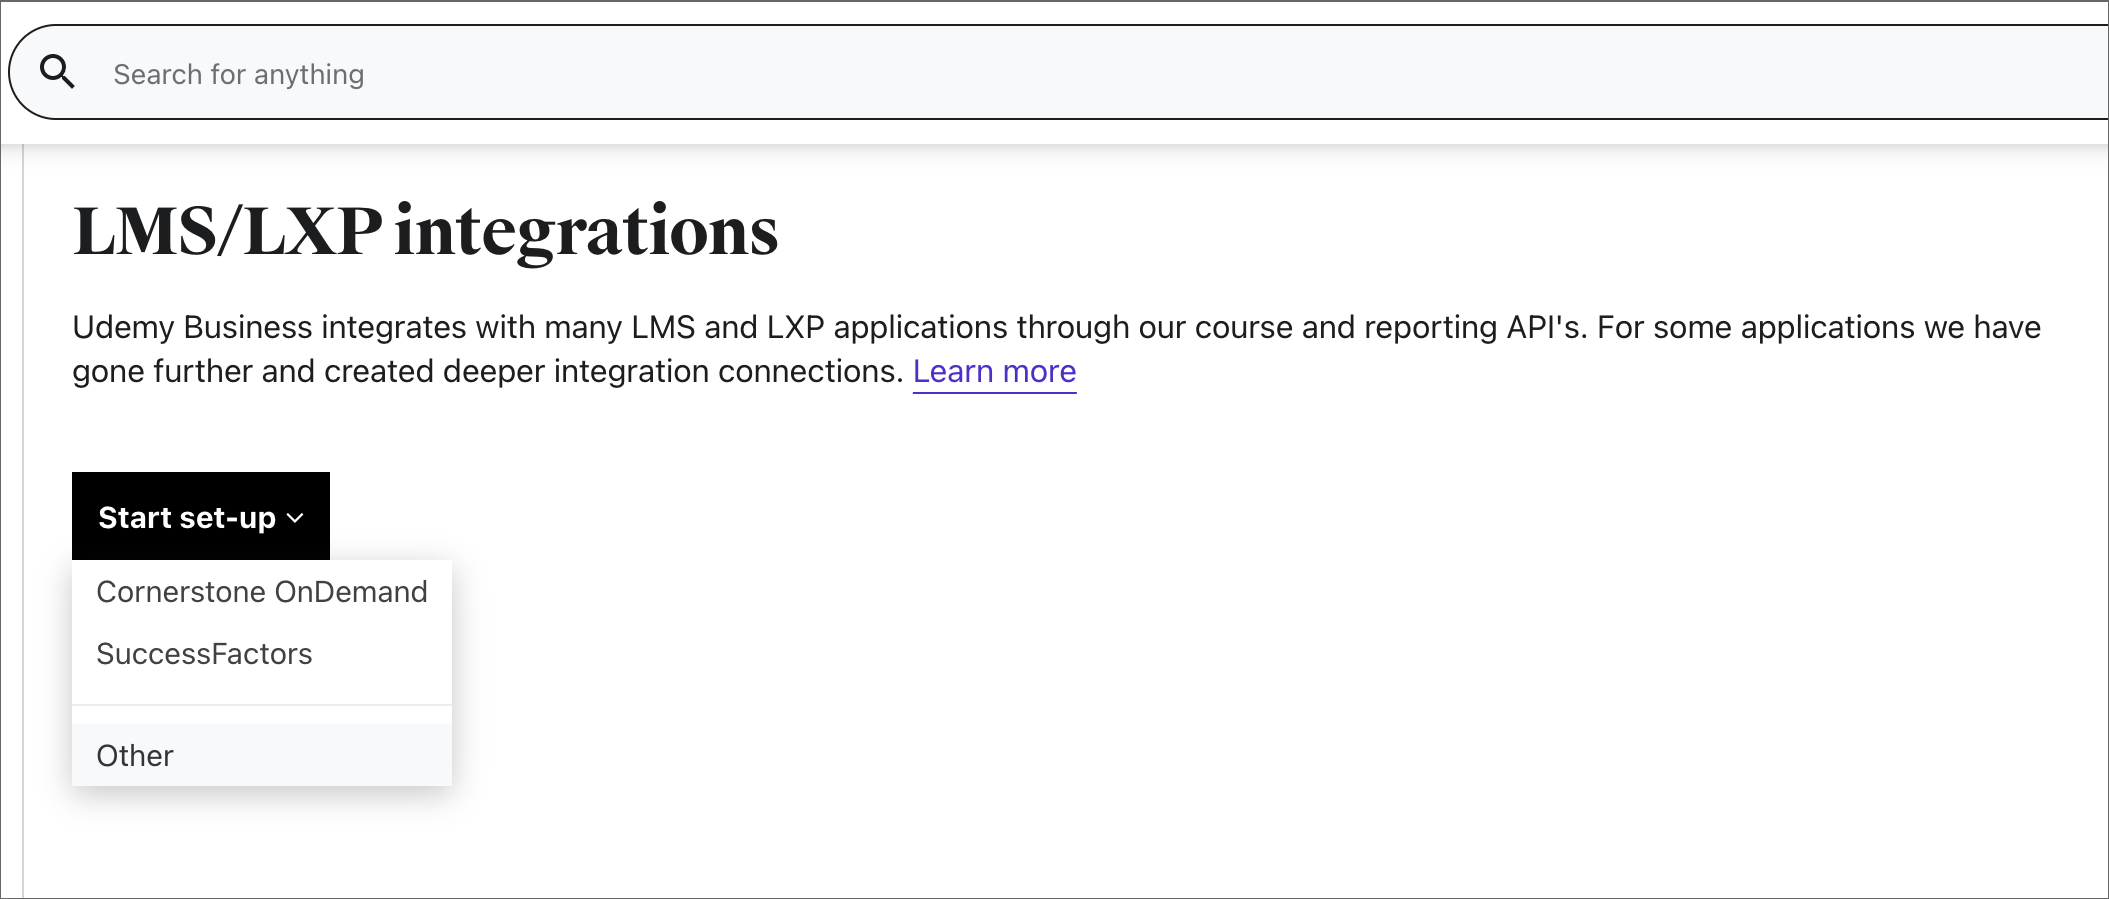 Imagen de la página de configuración de integraciones LMS/LXP.